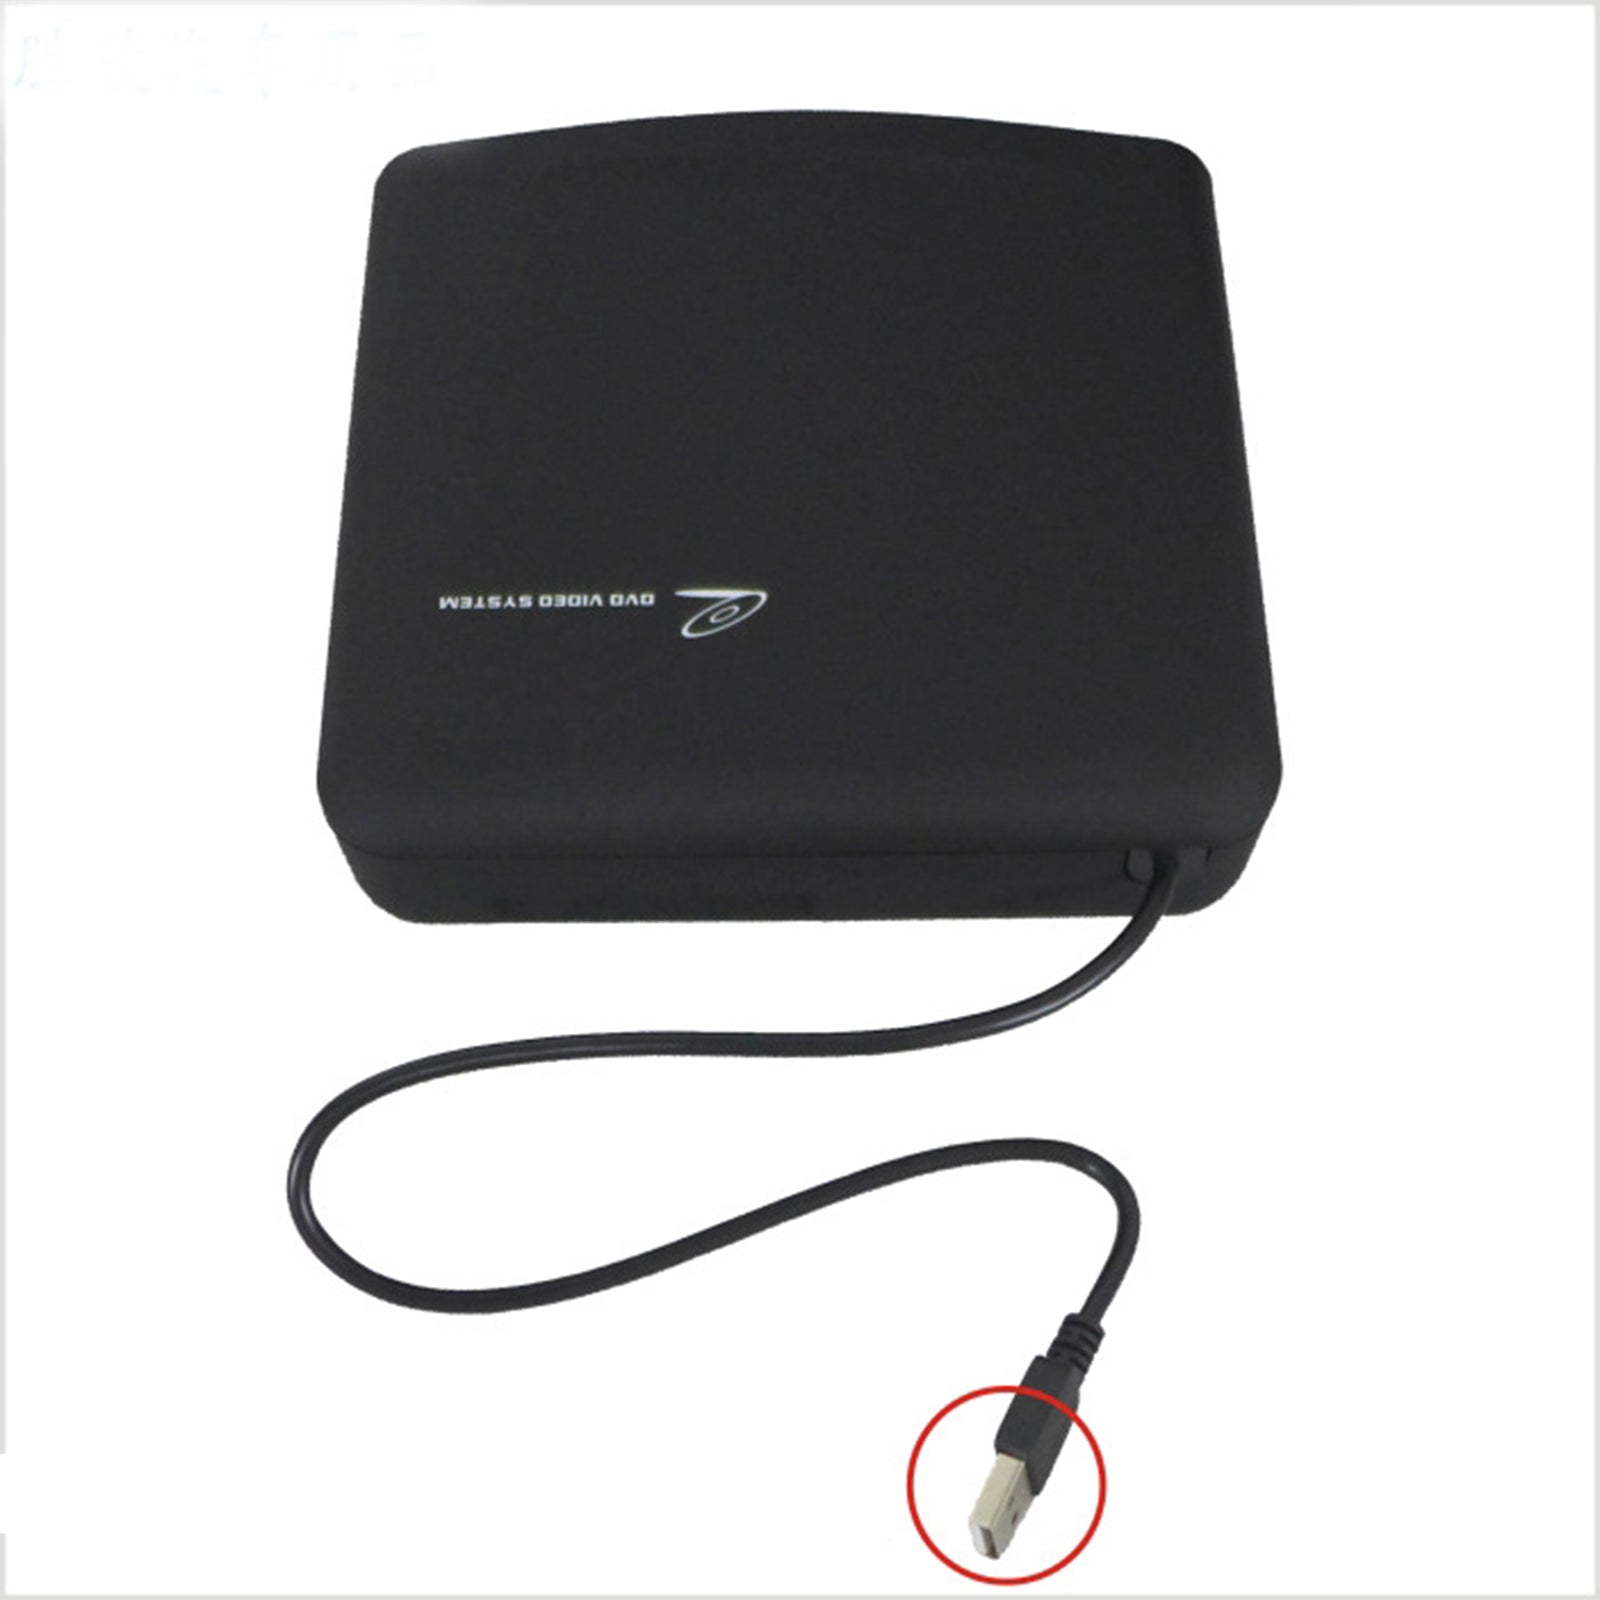 TD® Lecteur CD d'inhalation de voiture voiture Android navigation